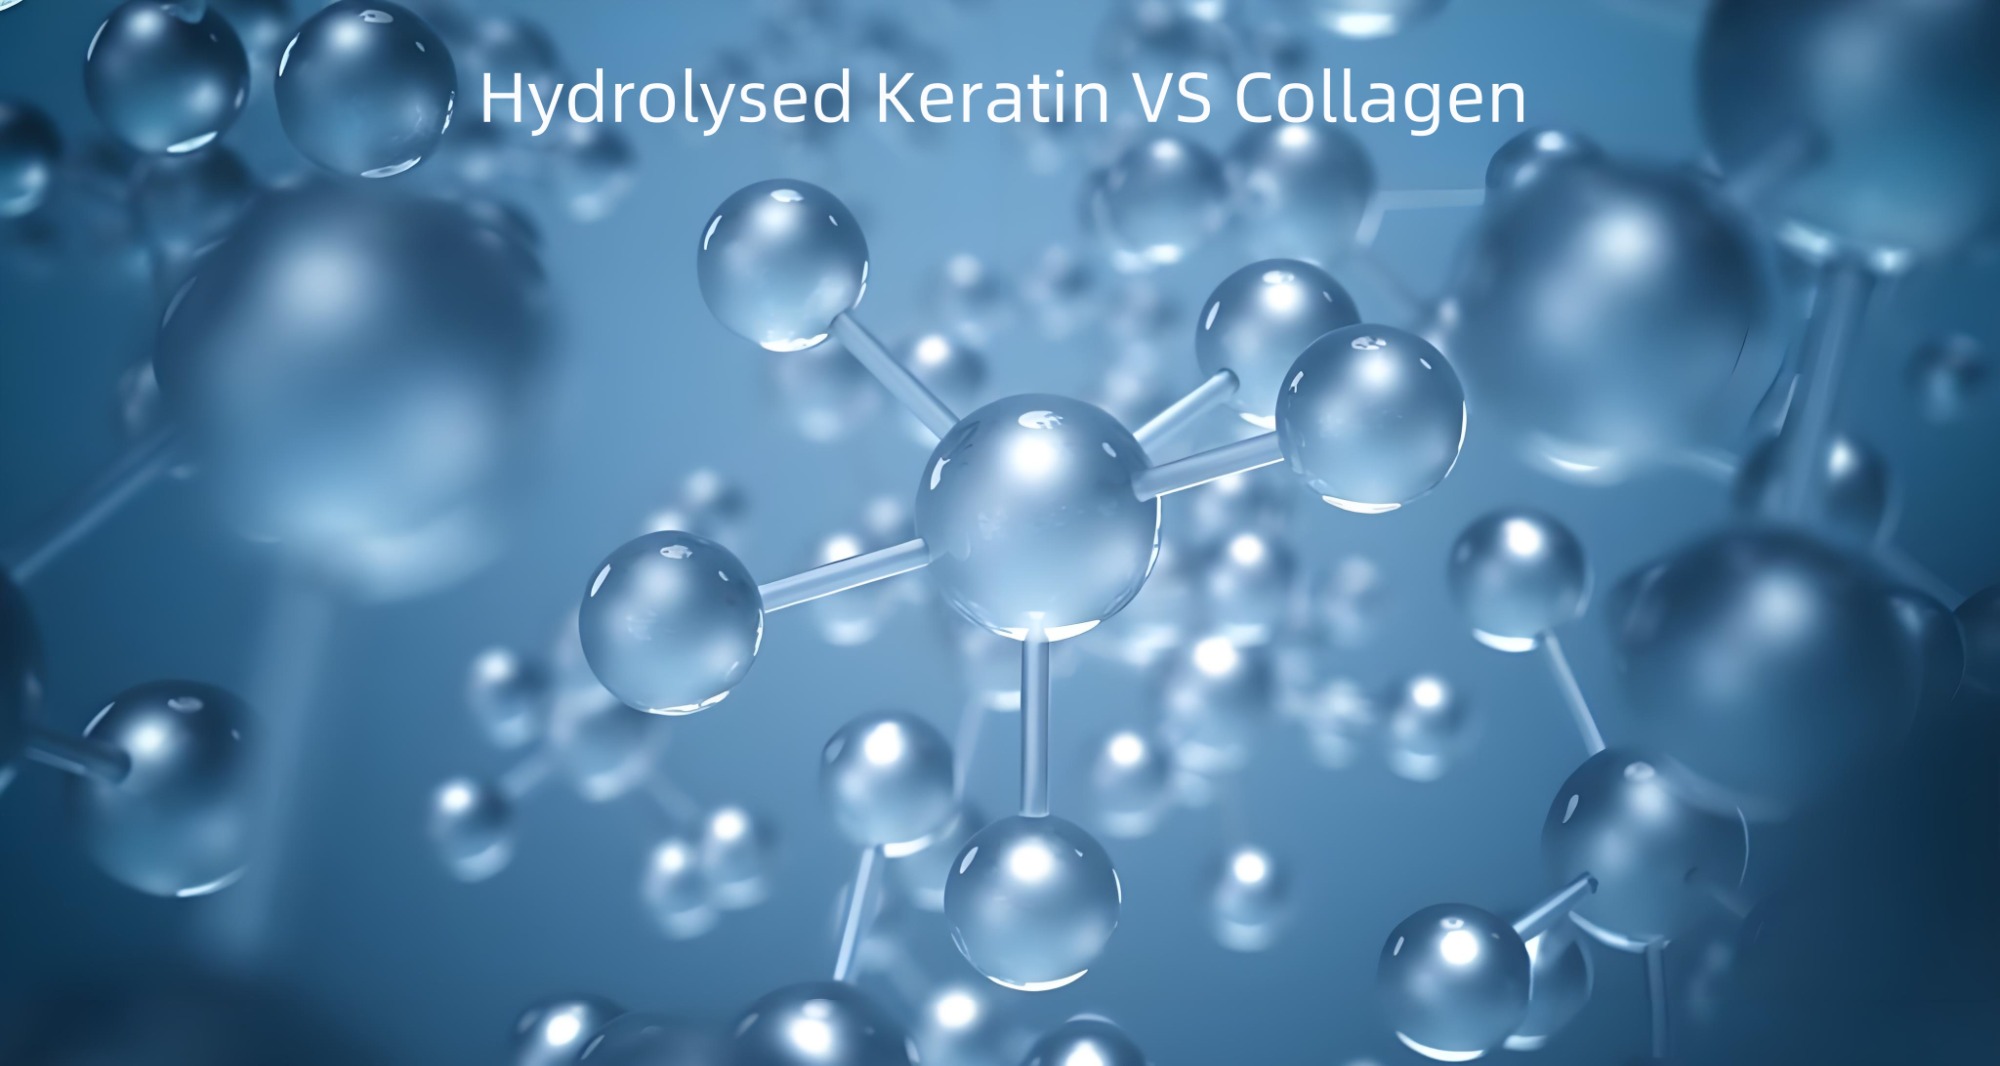 Hydrolysed Keratin VS Collagen